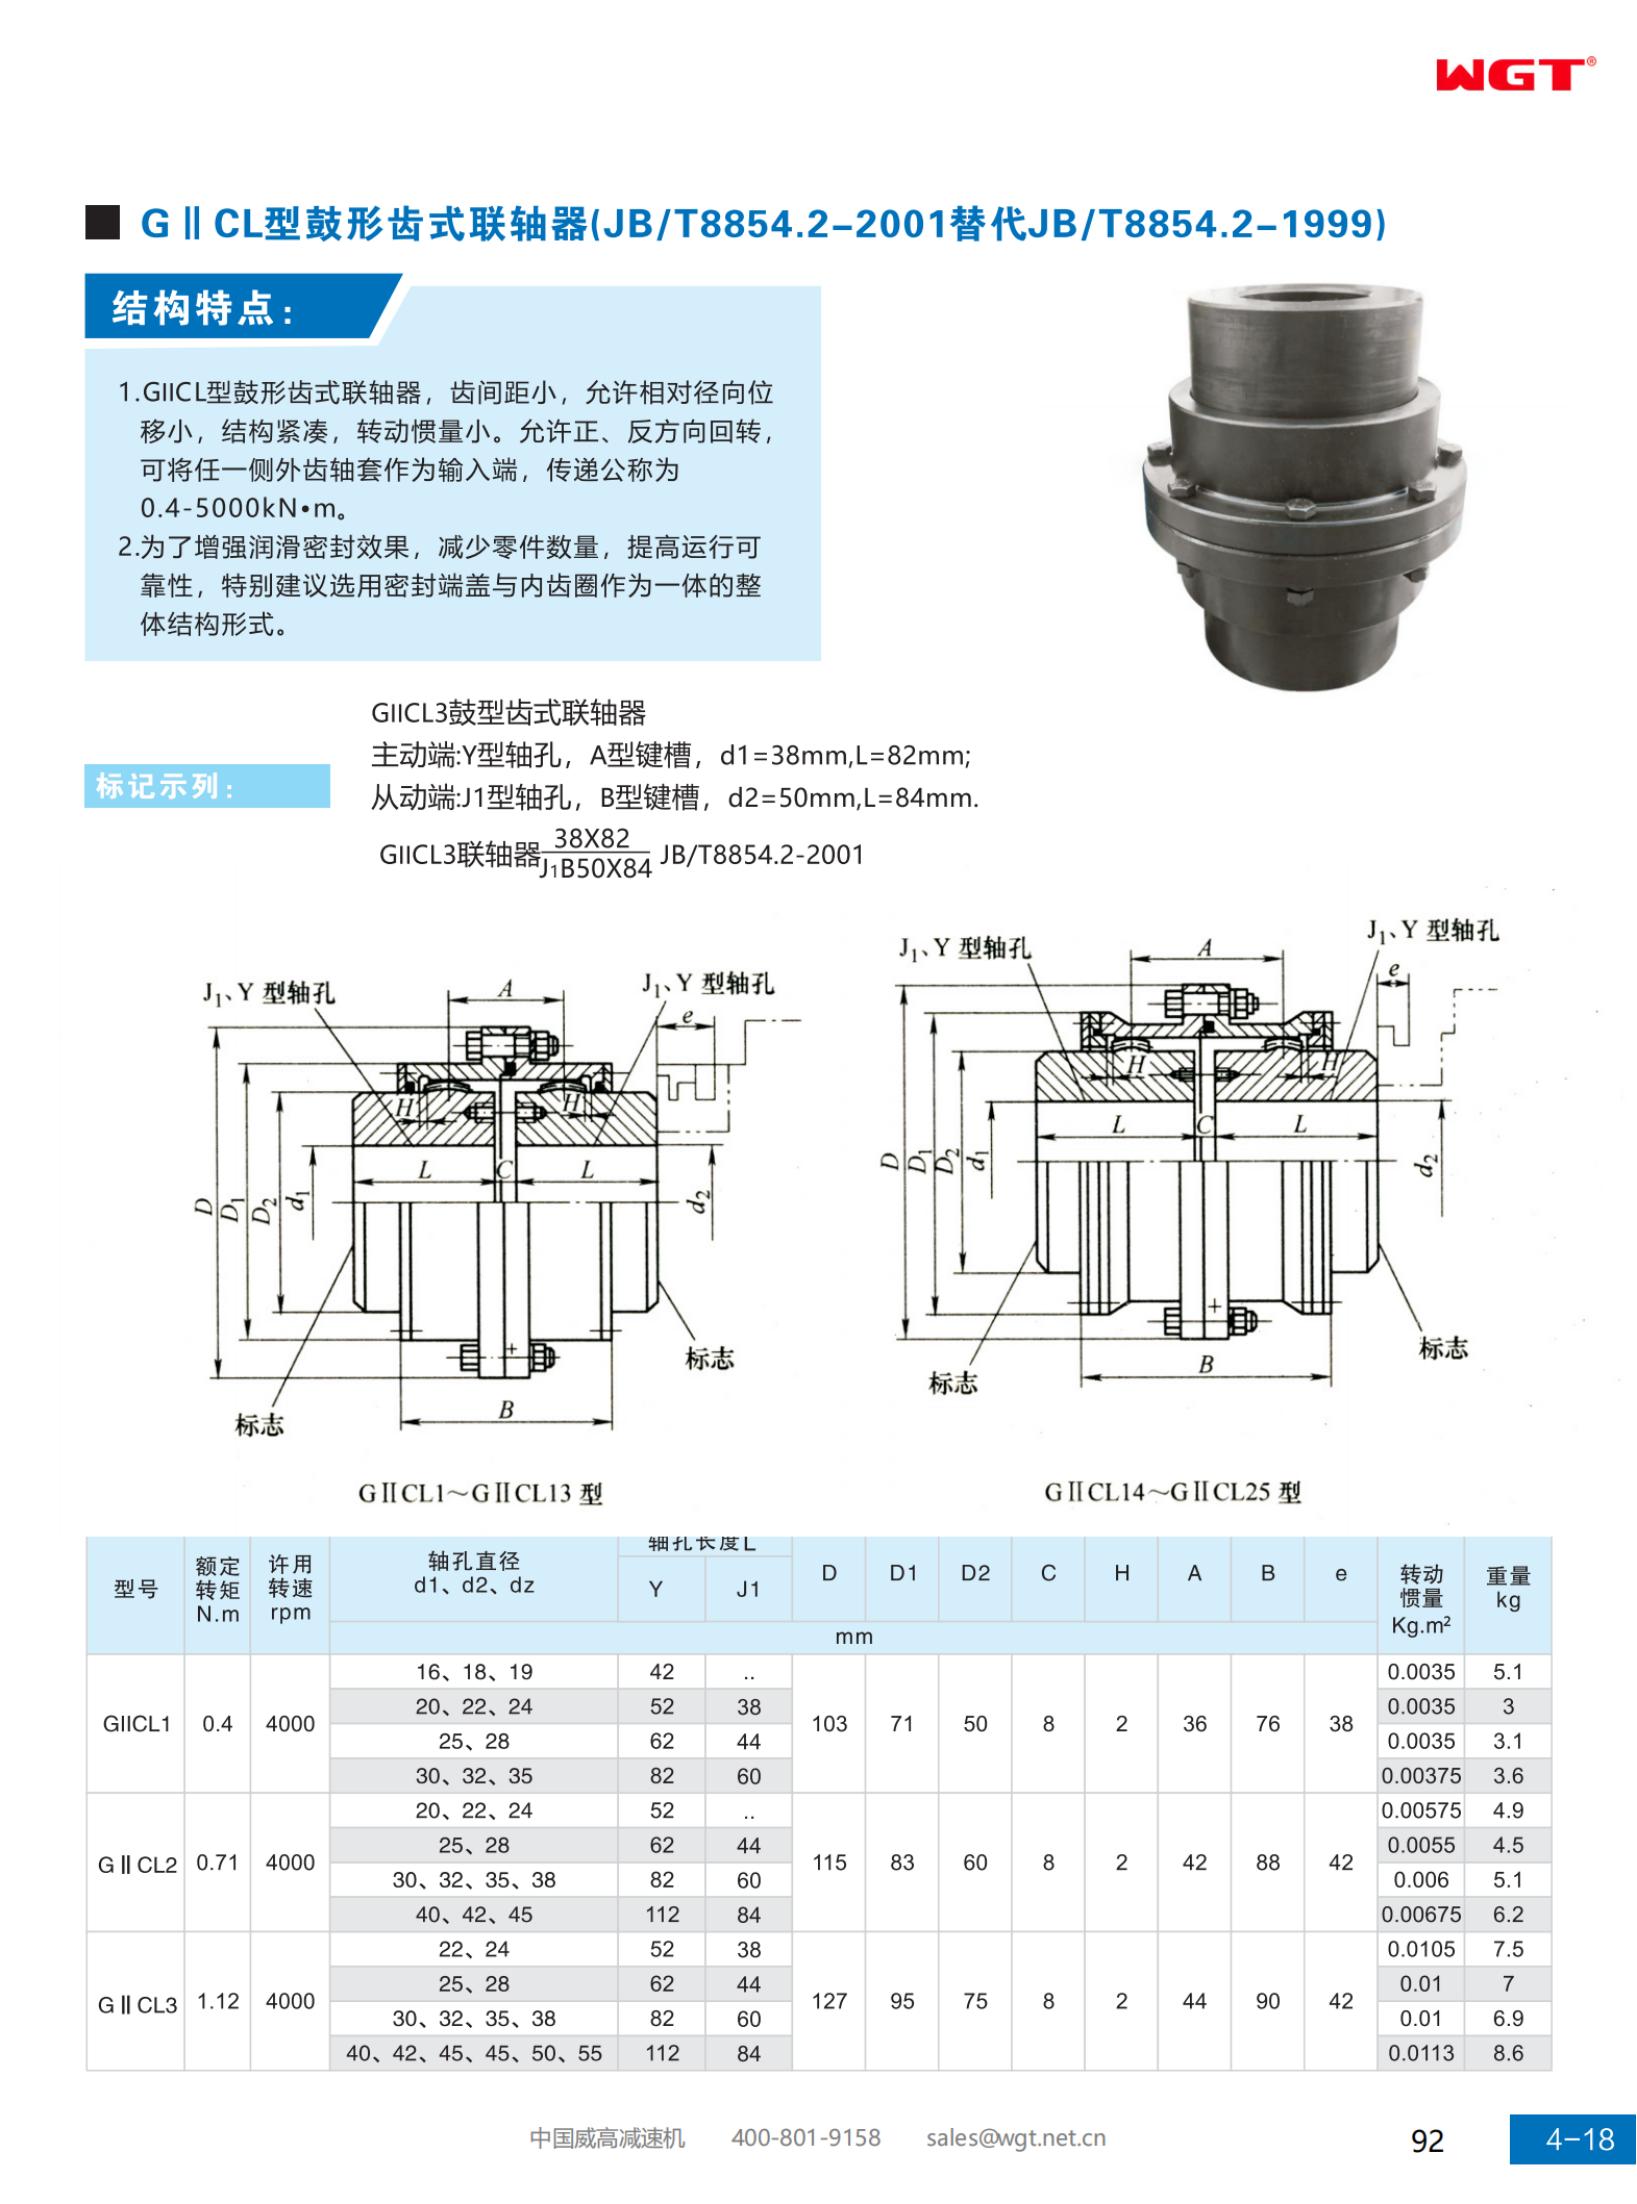 ​G II CL type drum gear coupling (JB/T8854.2-2001 replaces JB/T8854.2-1999)